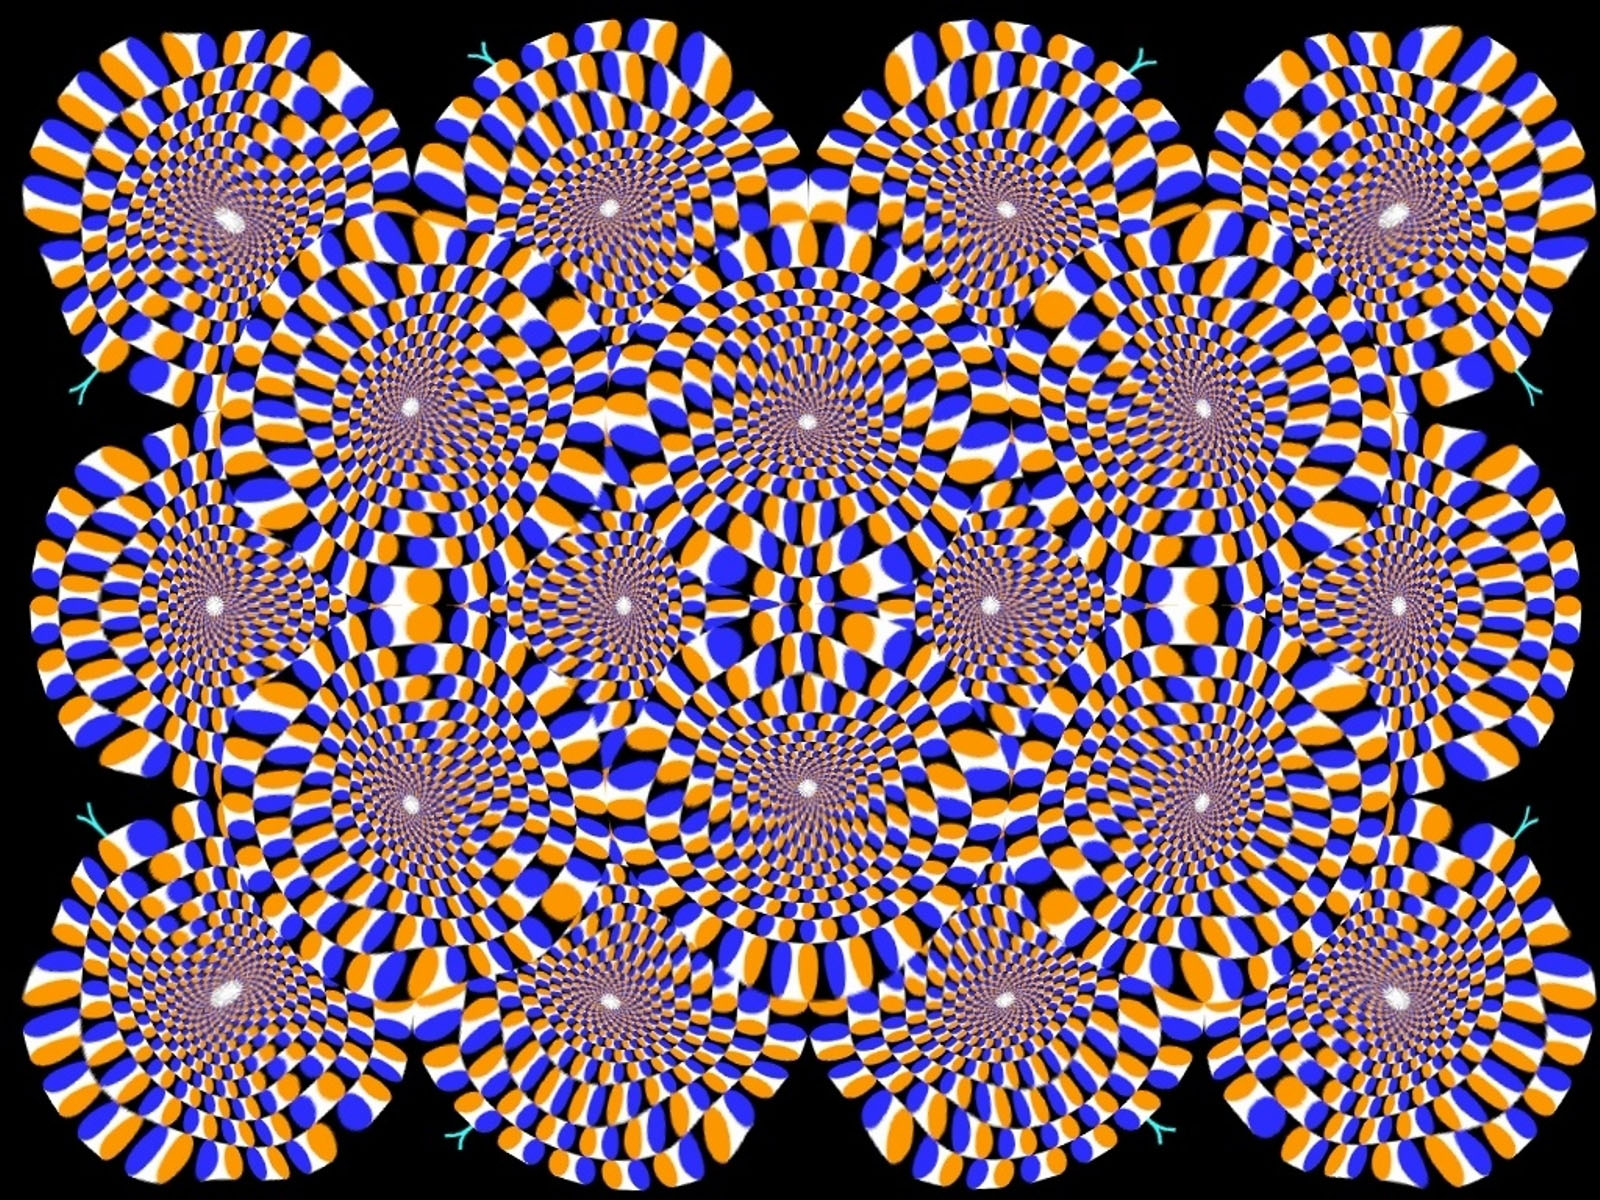 Wallpaper Optical Illusion